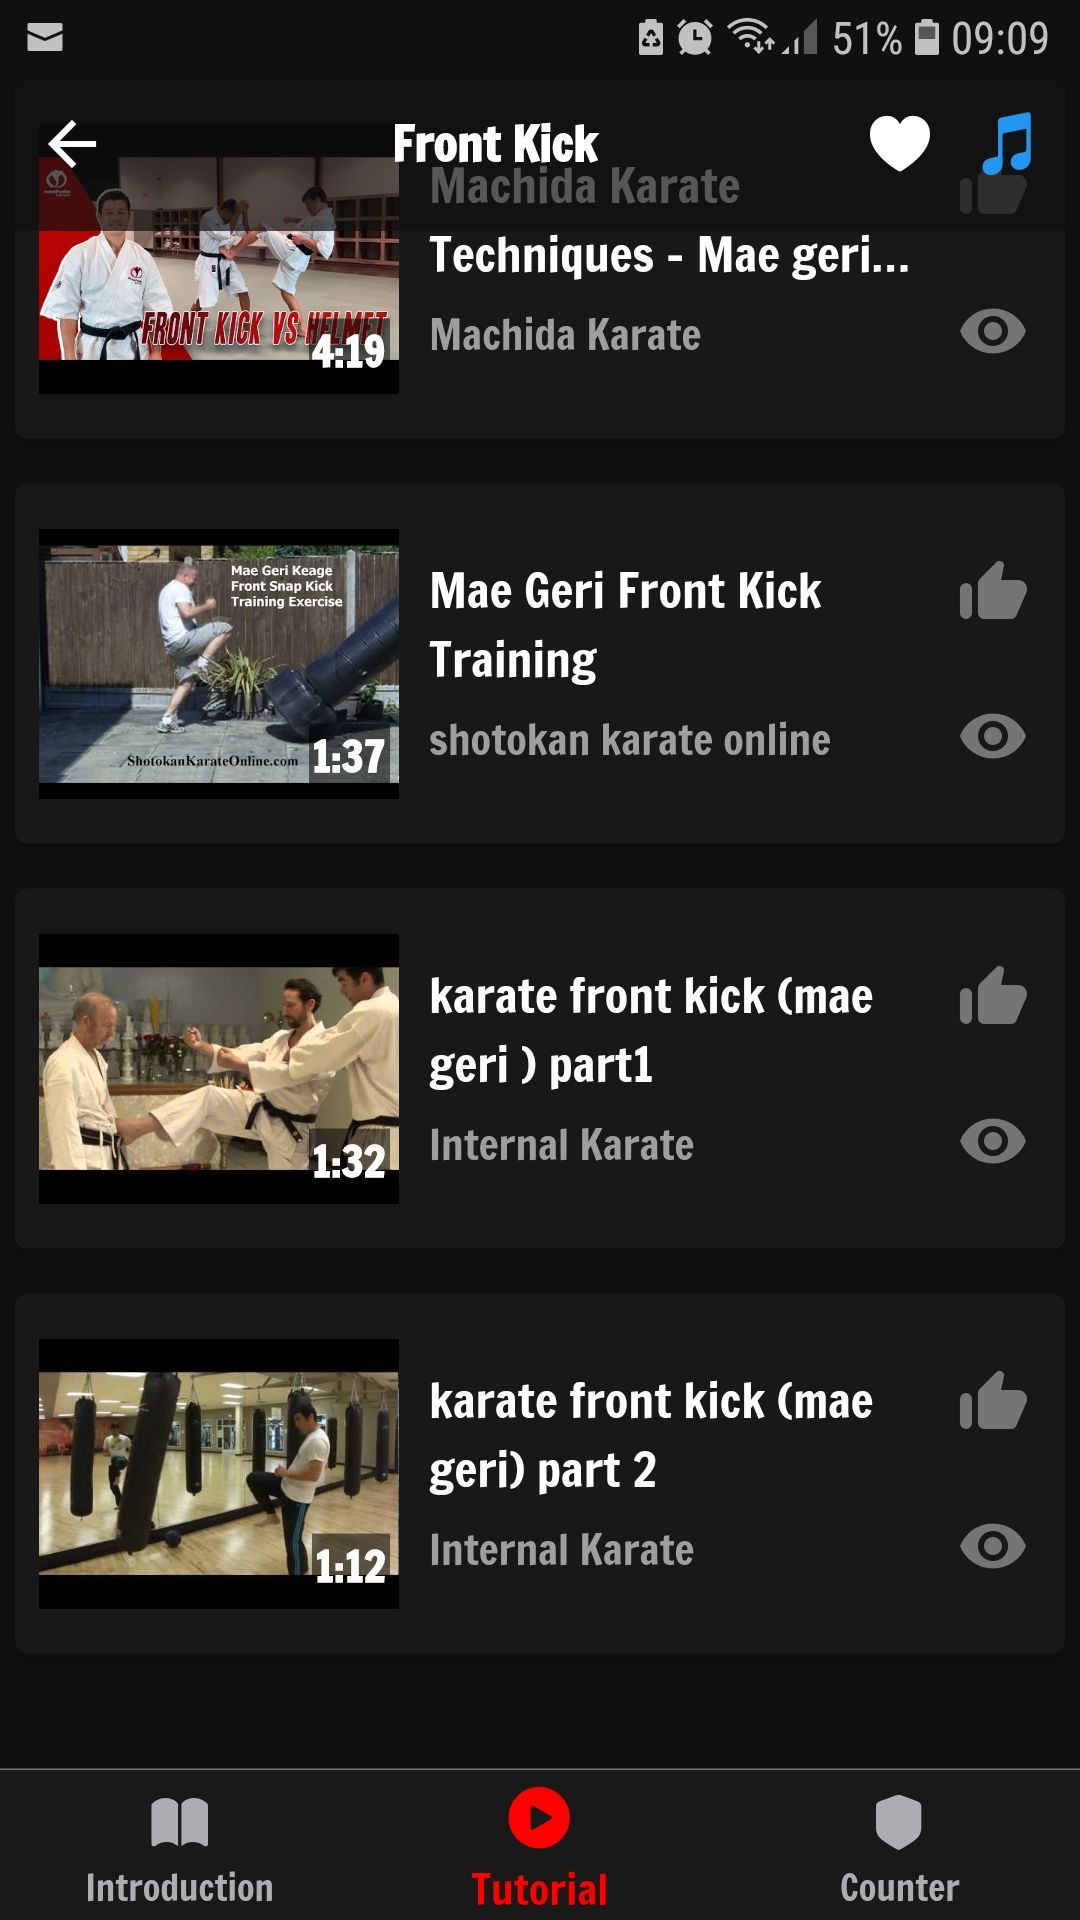 Karate Training mobile app front kick videos